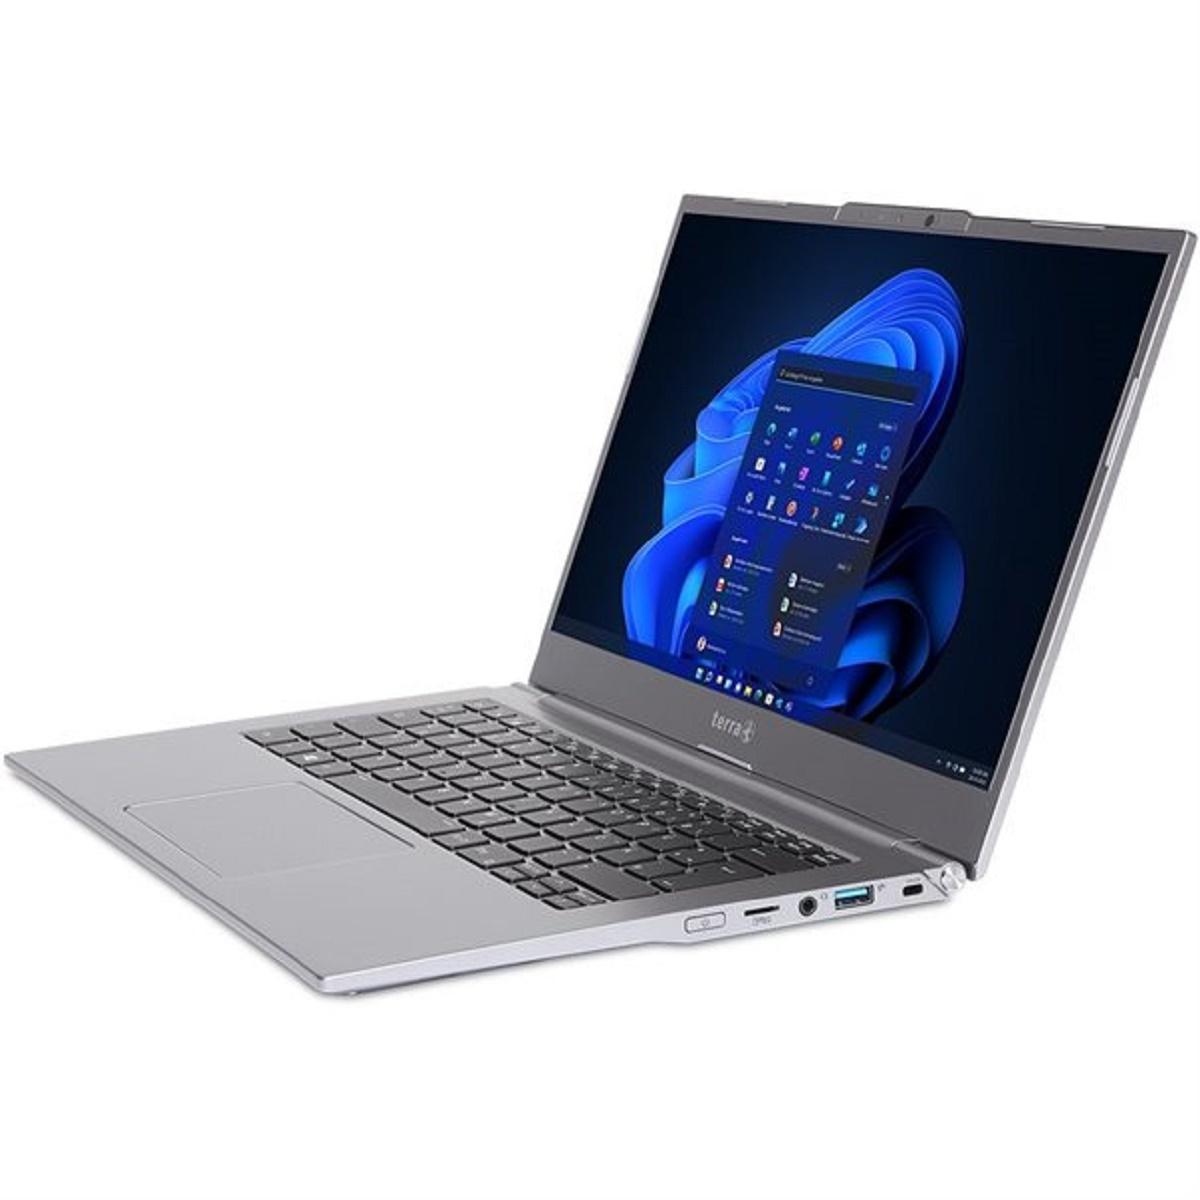 TERRA MOBILE Silber RAM, 1470U, Intel® GB SSD, Notebook 16 mit GB 14 Zoll 500 i5 Core™ Prozessor, Display